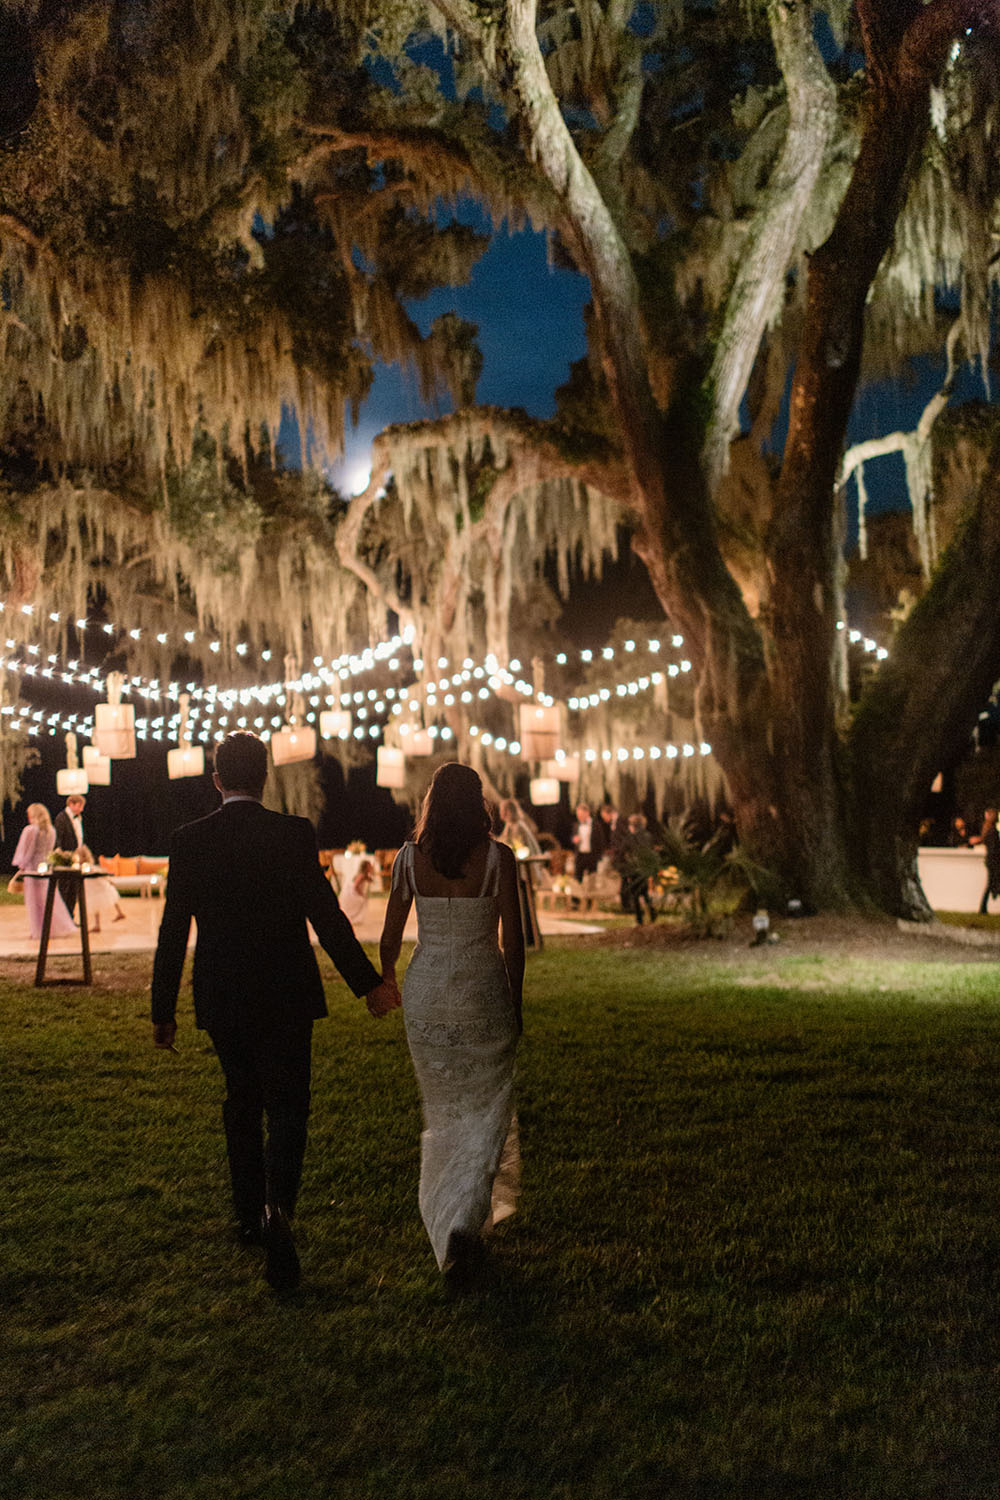 Fall Charleston wedding inspired by Tuscany